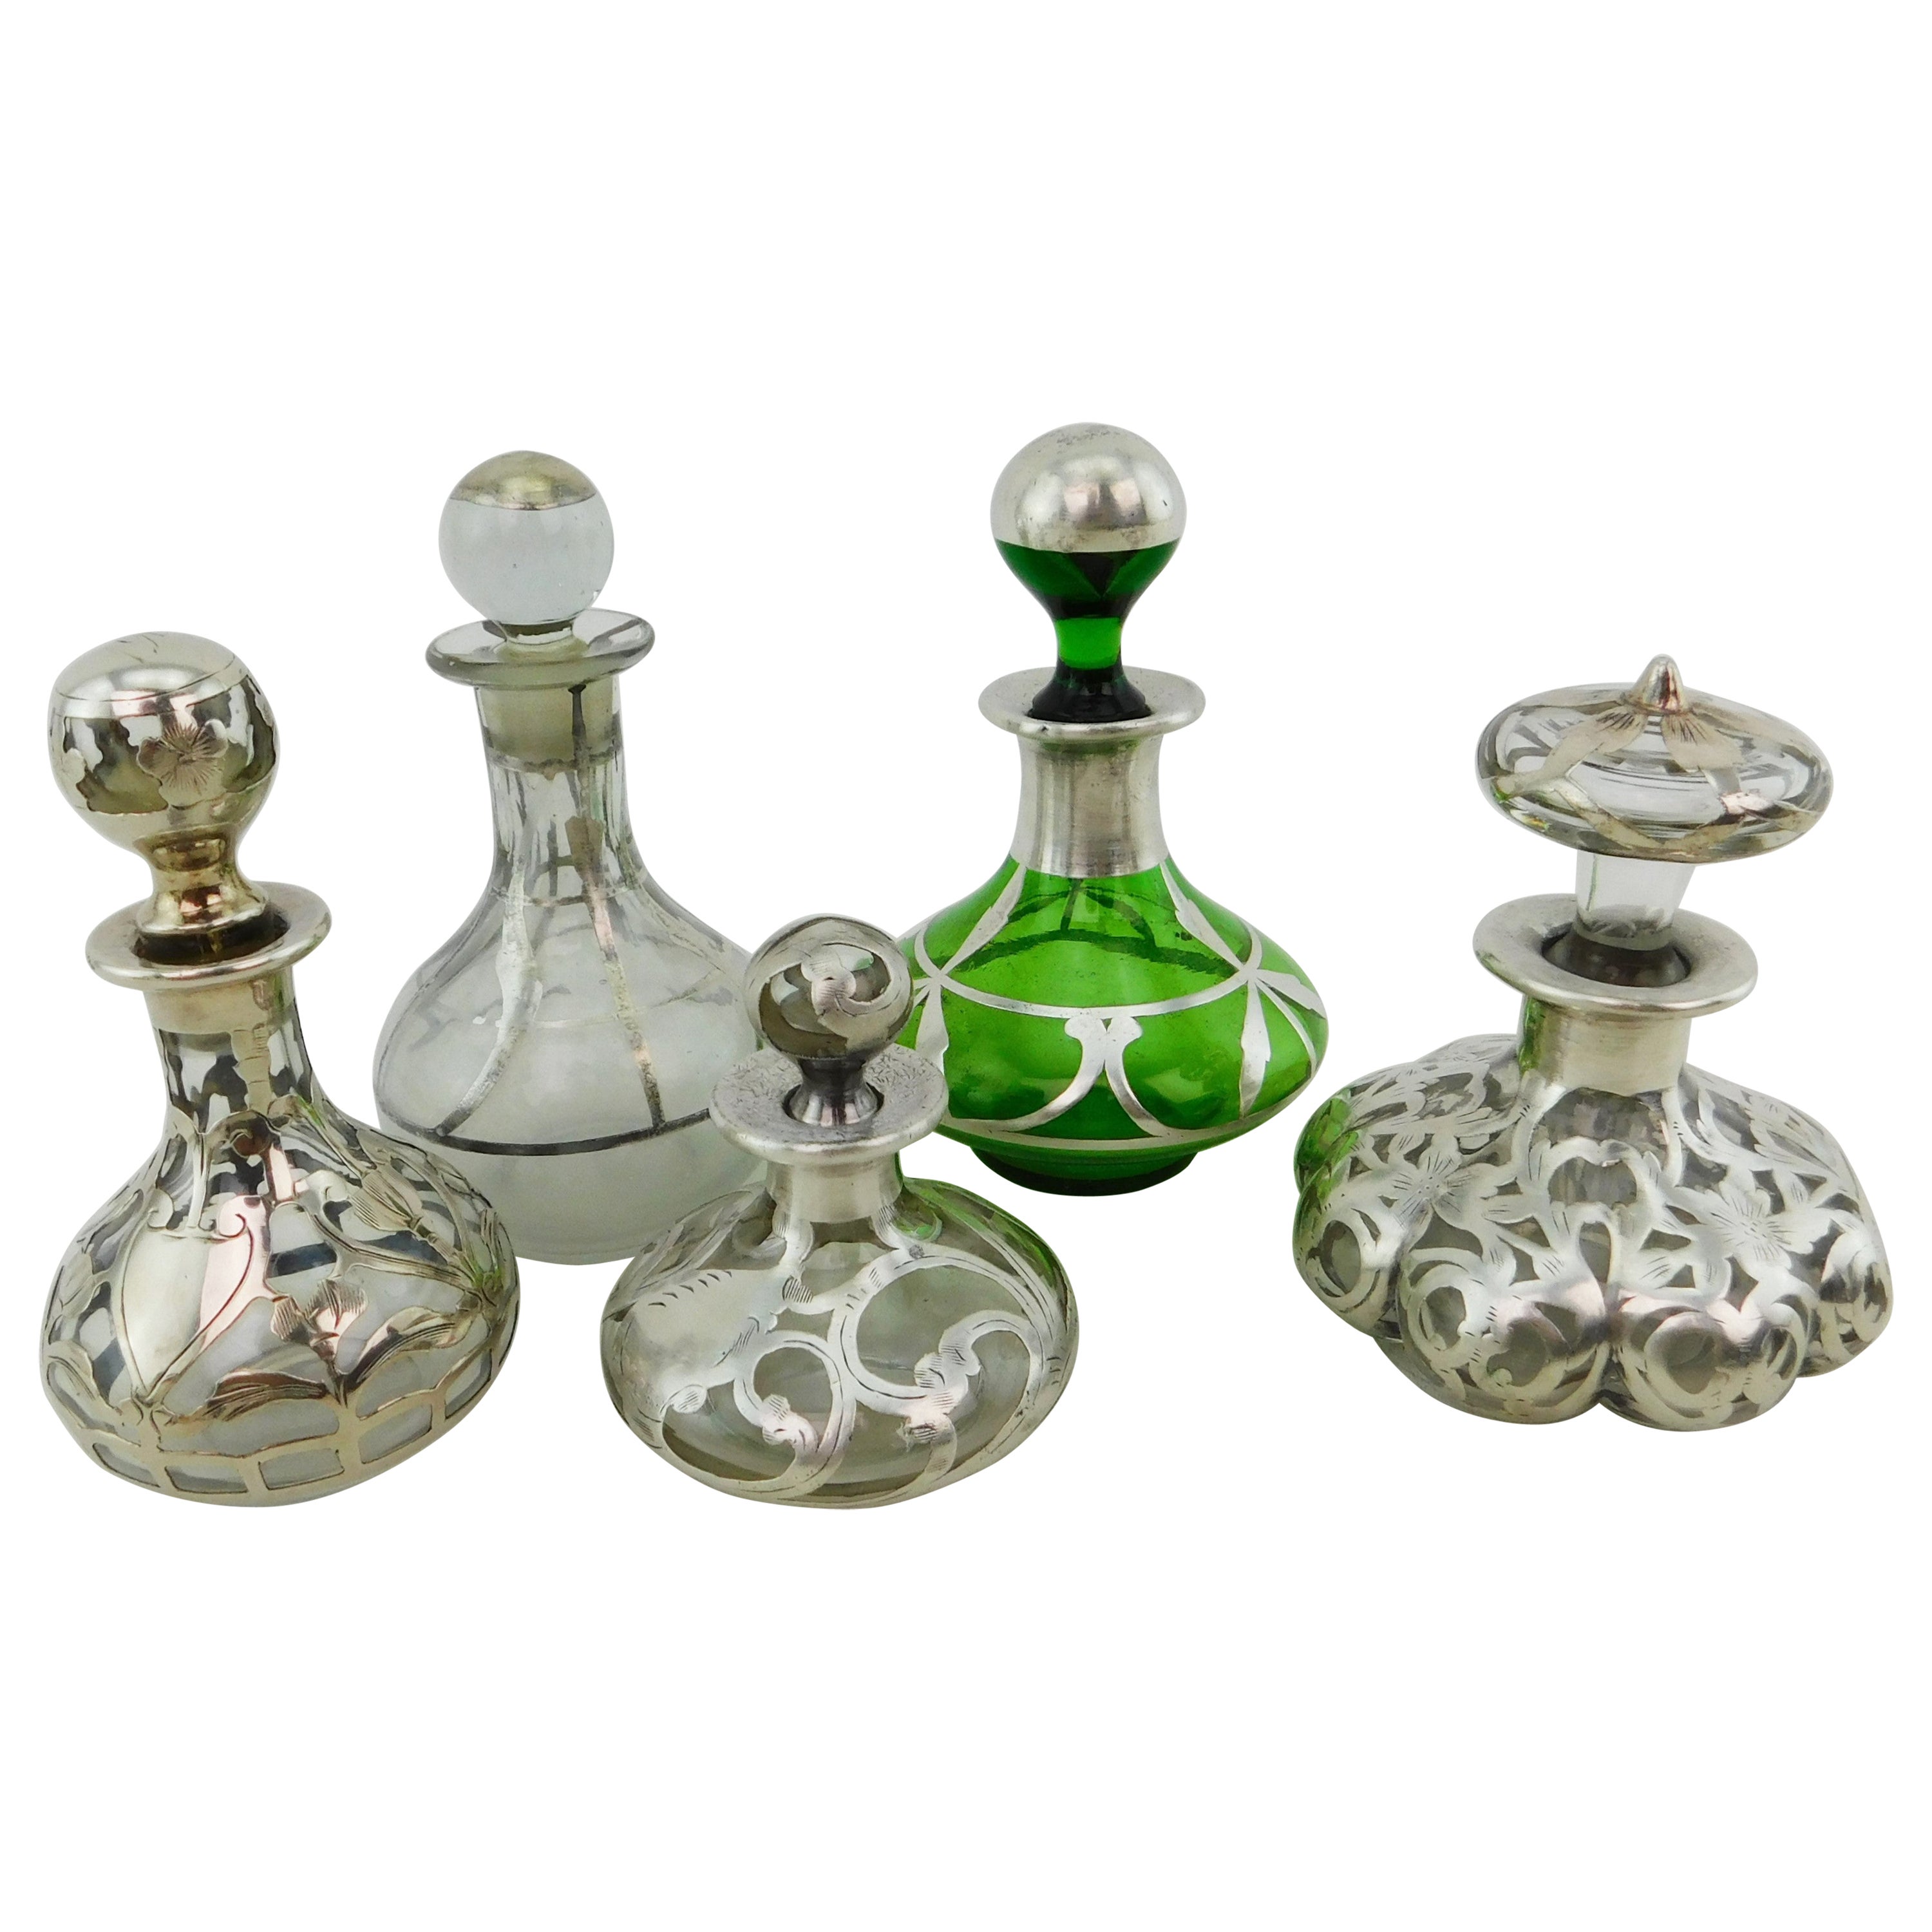 Five Art Nouveau Perfume Bottles circa 1900 Silver Overlay on Glass 19th Century